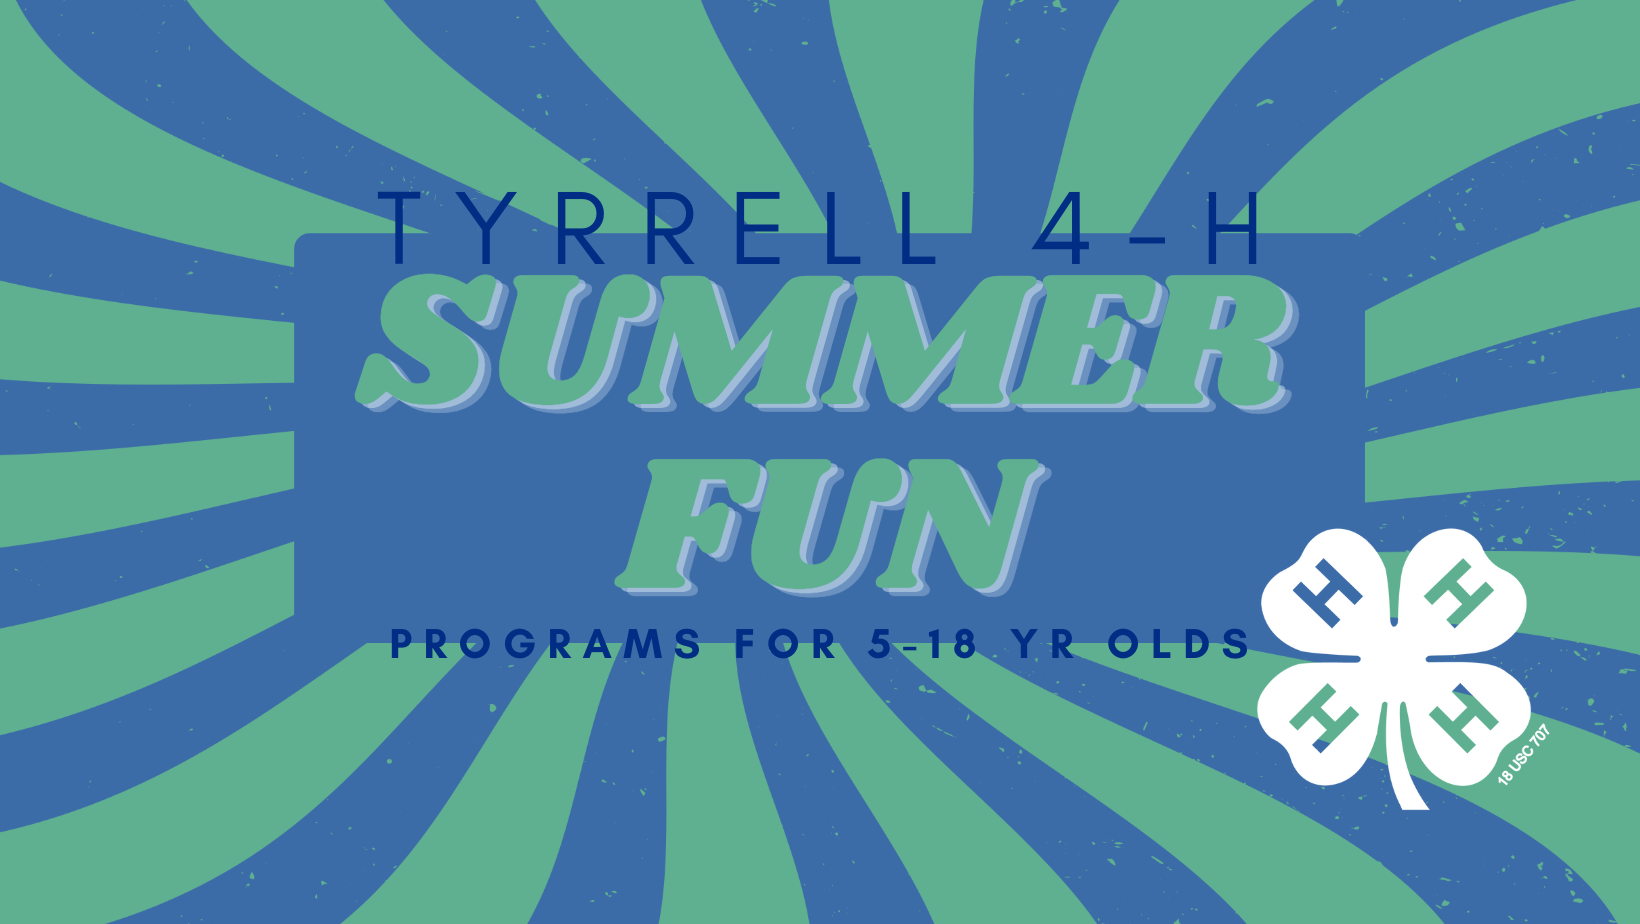 Tyrrell 4-H Summer Fun Programs for 5-18 YR Olds